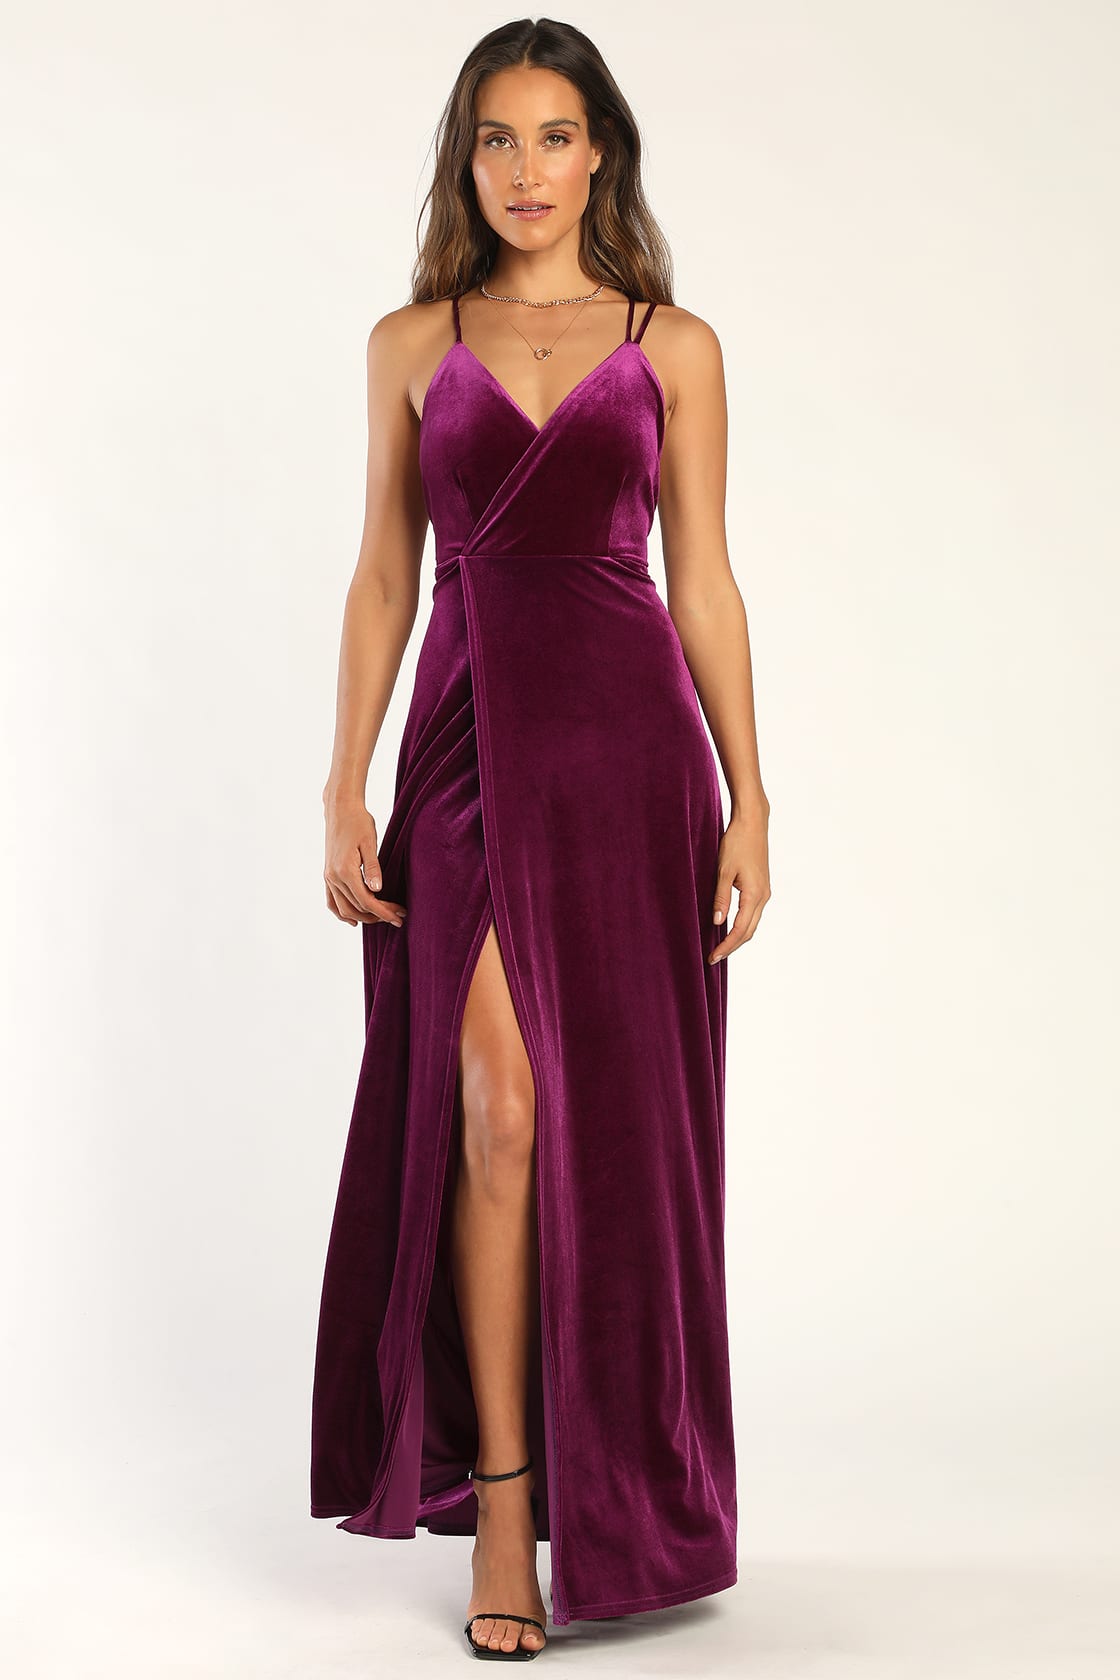 Whimsical Romance Purple Velvet Faux-Wrap Maxi Dress